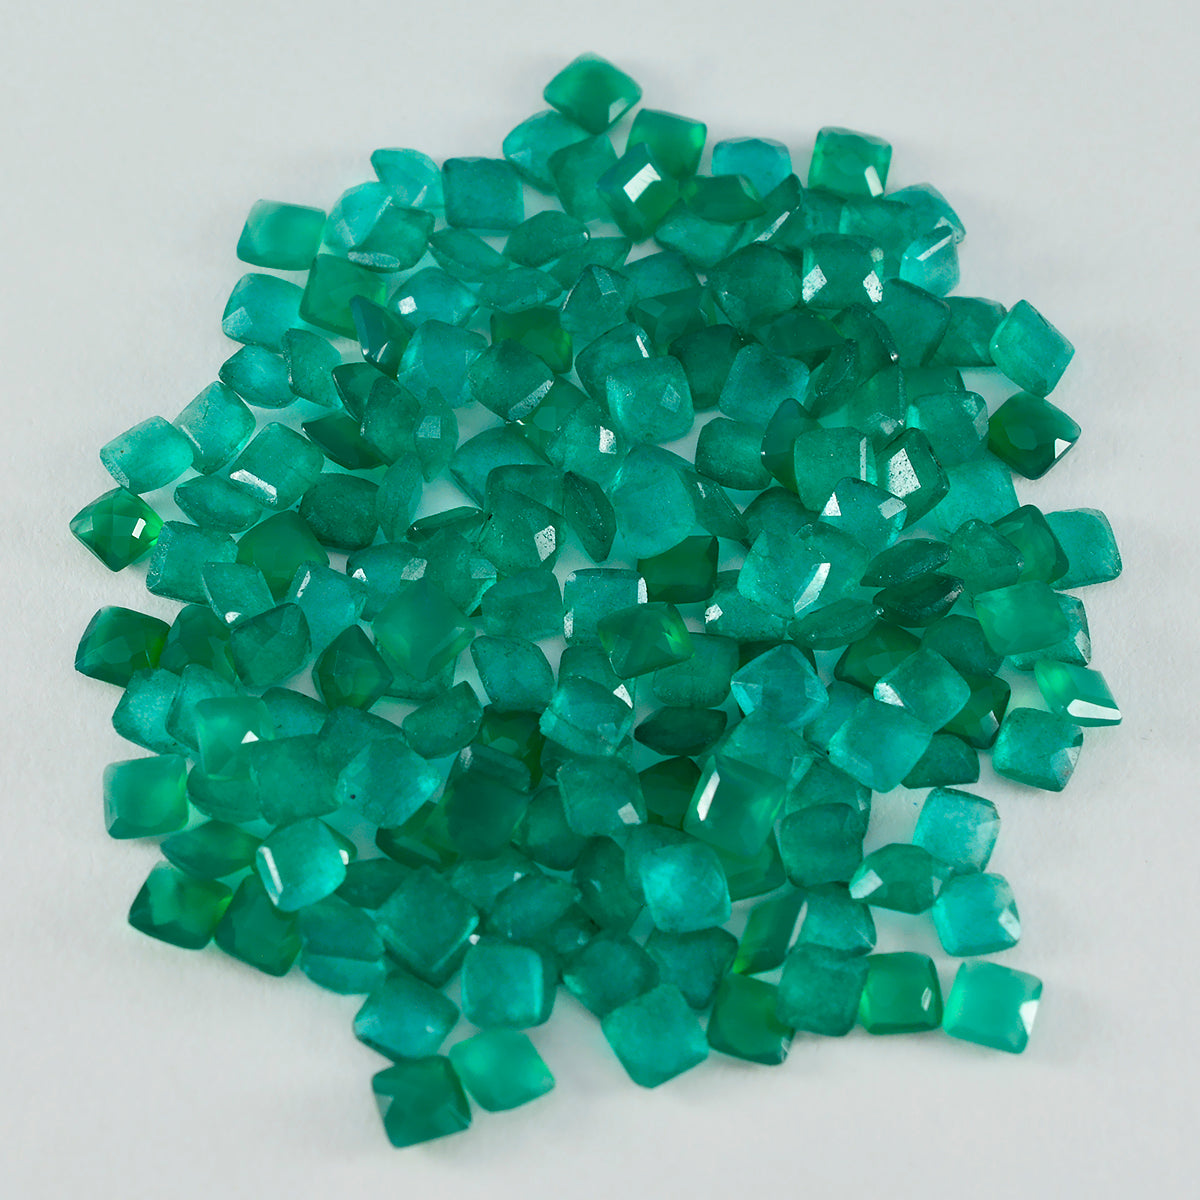 Riyogems 1PC Real Green Jasper Faceted 4x4 mm Square Shape startling Quality Loose Gemstone